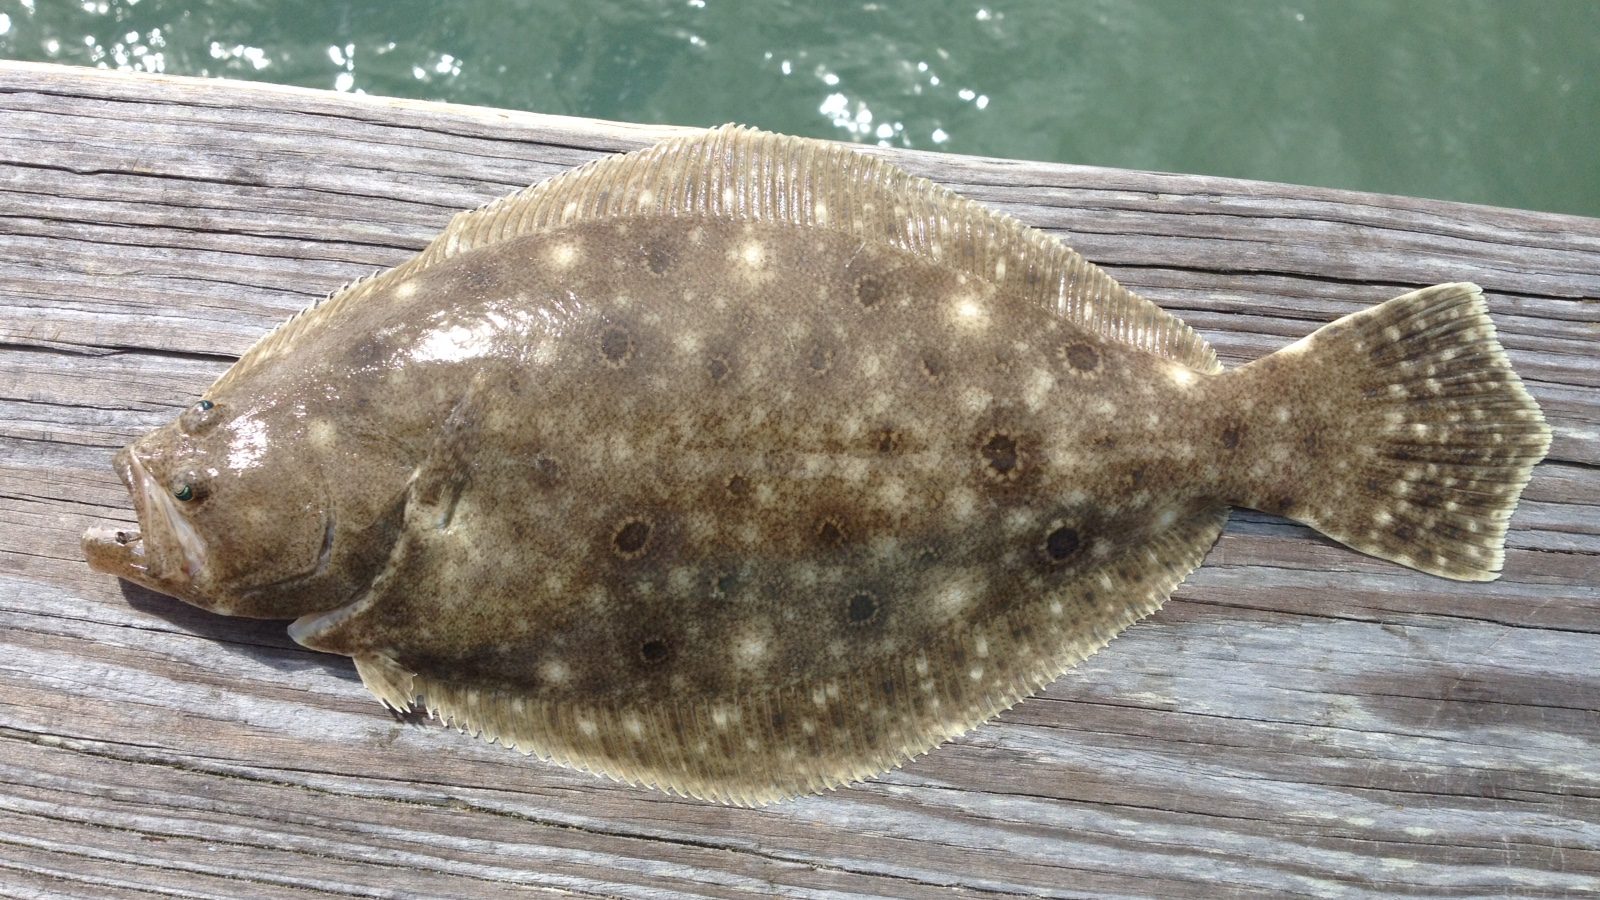 Two-week long recreational flounder season opens Friday in North Carolina waters